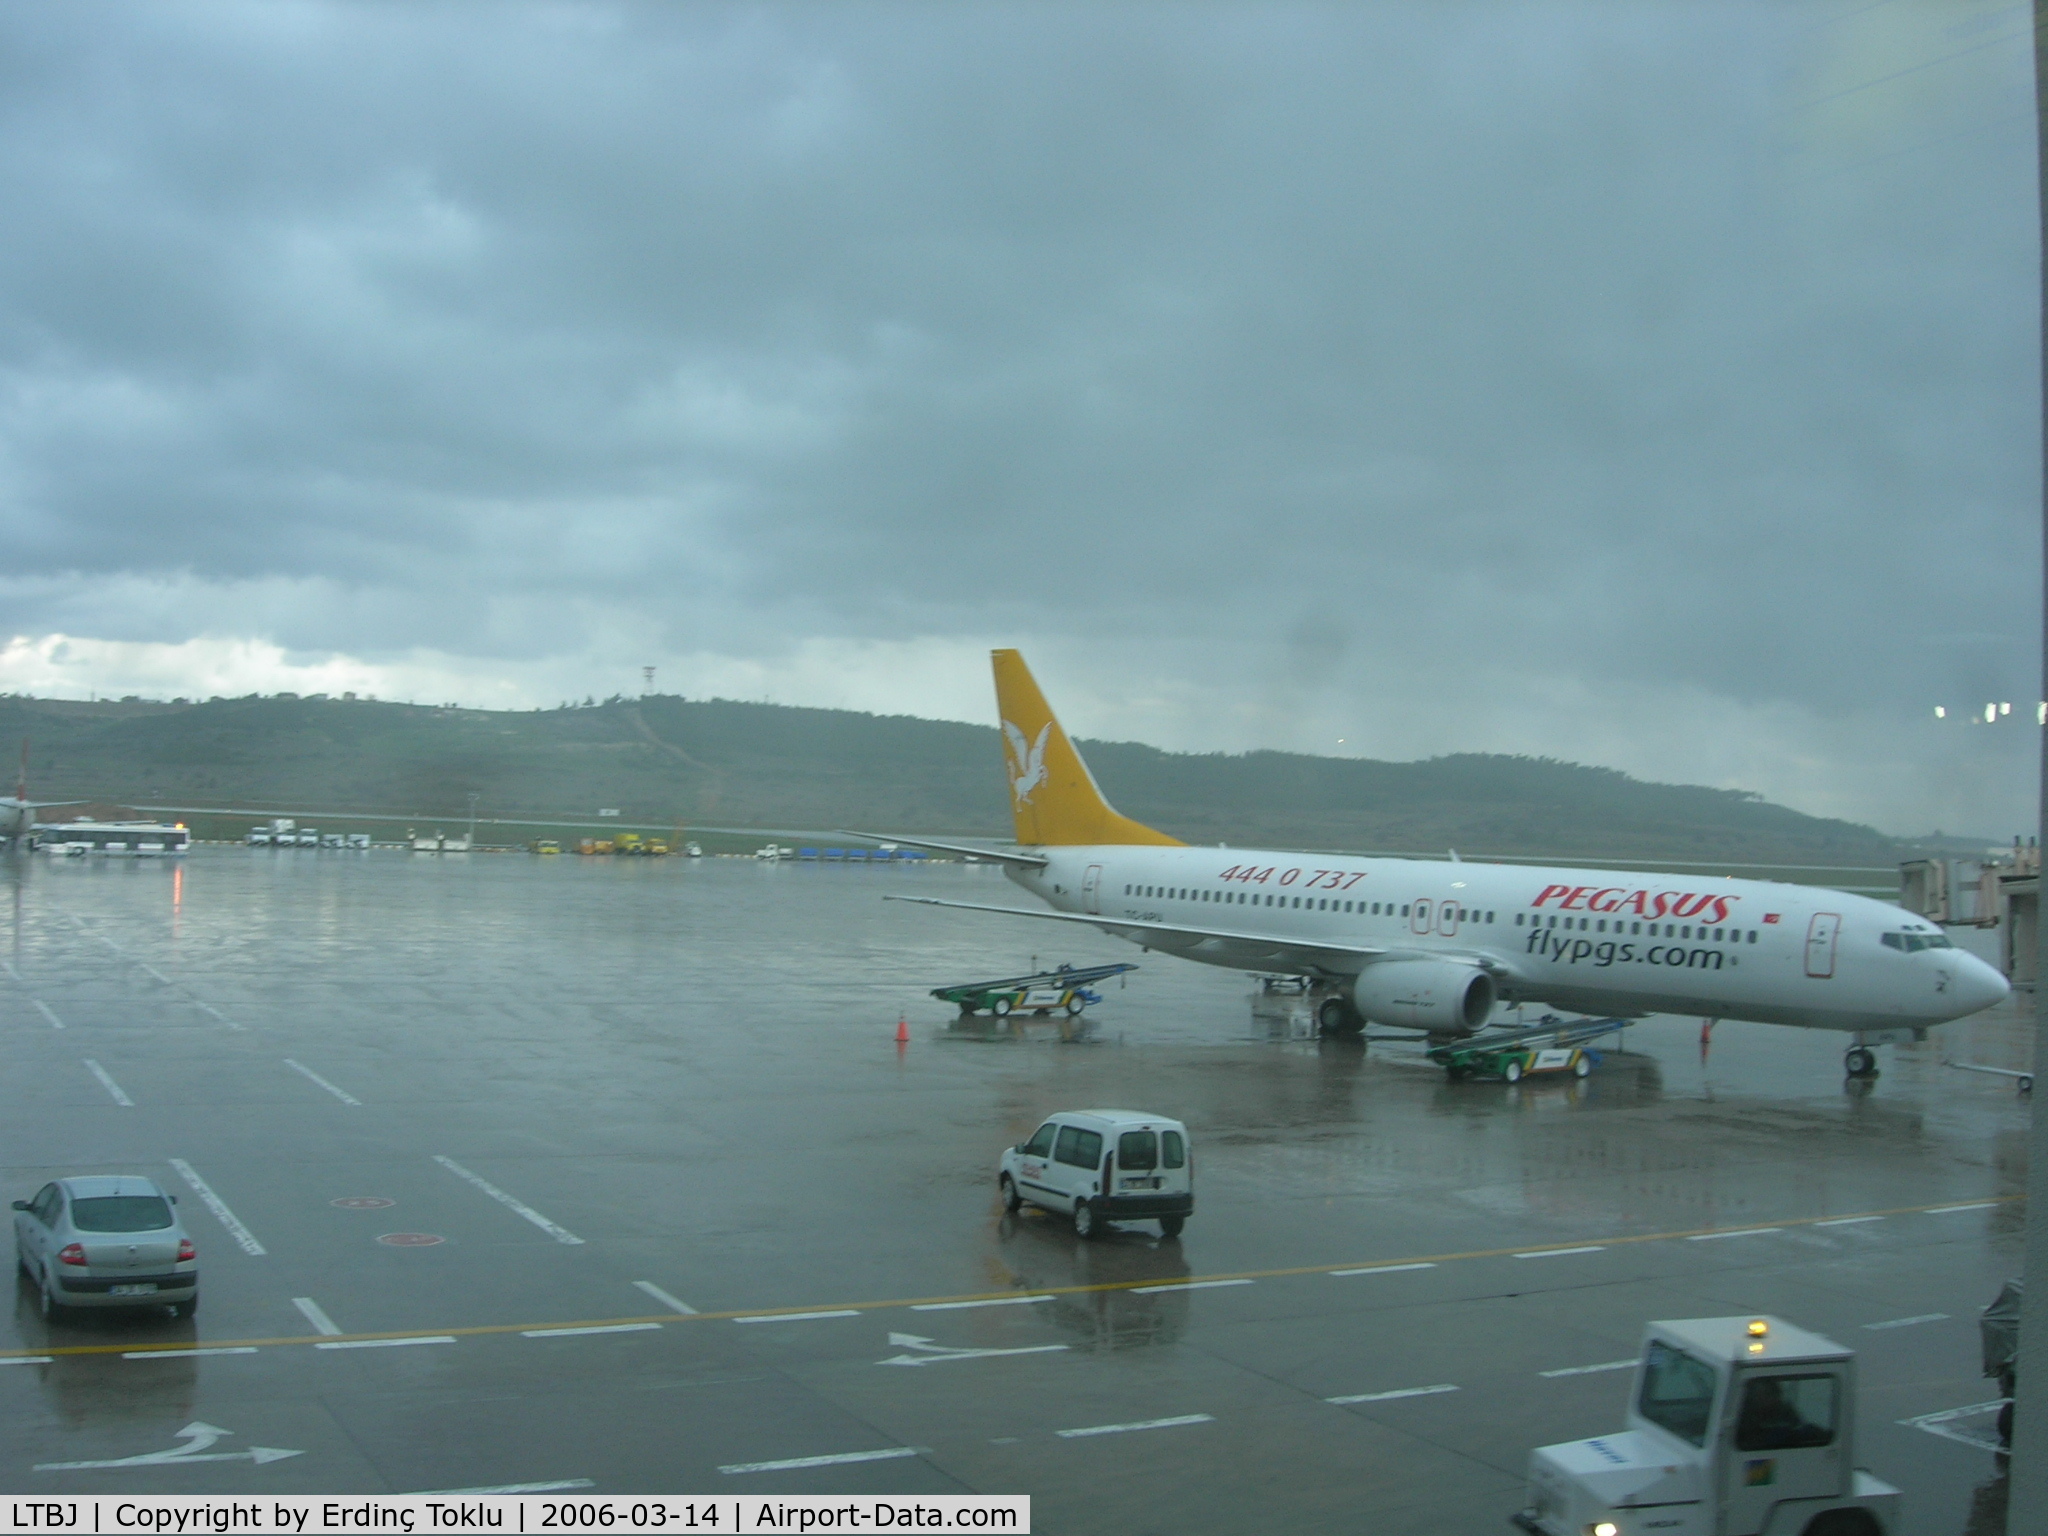 ?zmir Adnan Menderes Airport, ?zmir Turkey (LTBJ) - It also rains in Izmir